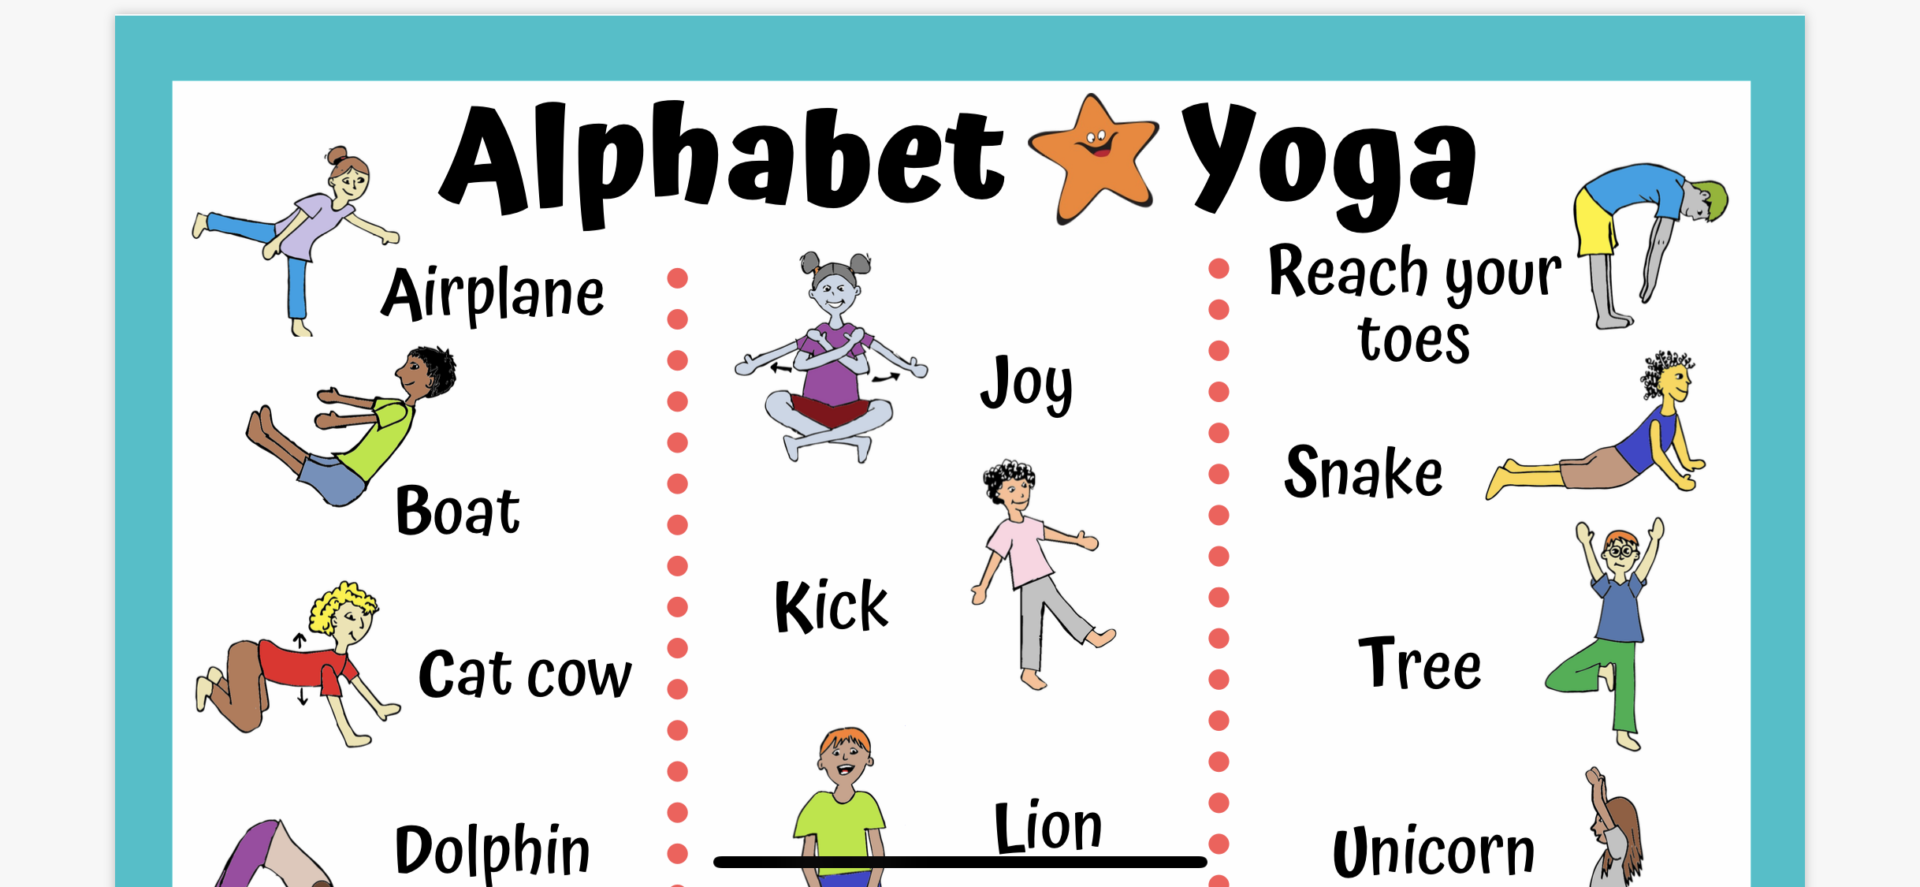 Alphabet Yoga